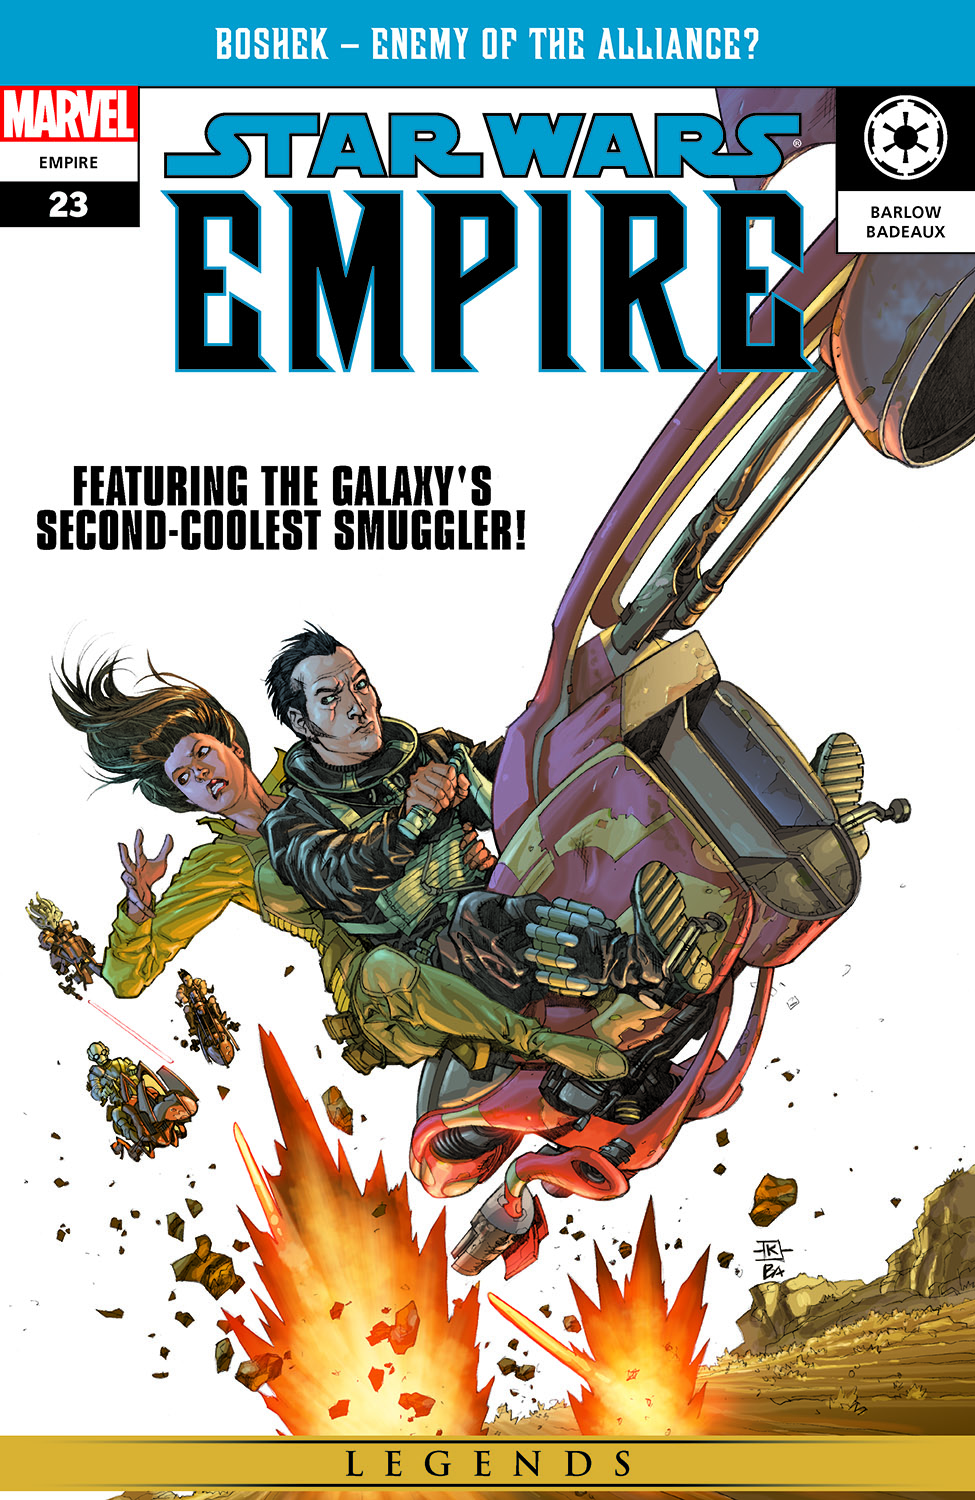 Star Wars: Empire (2002) #23